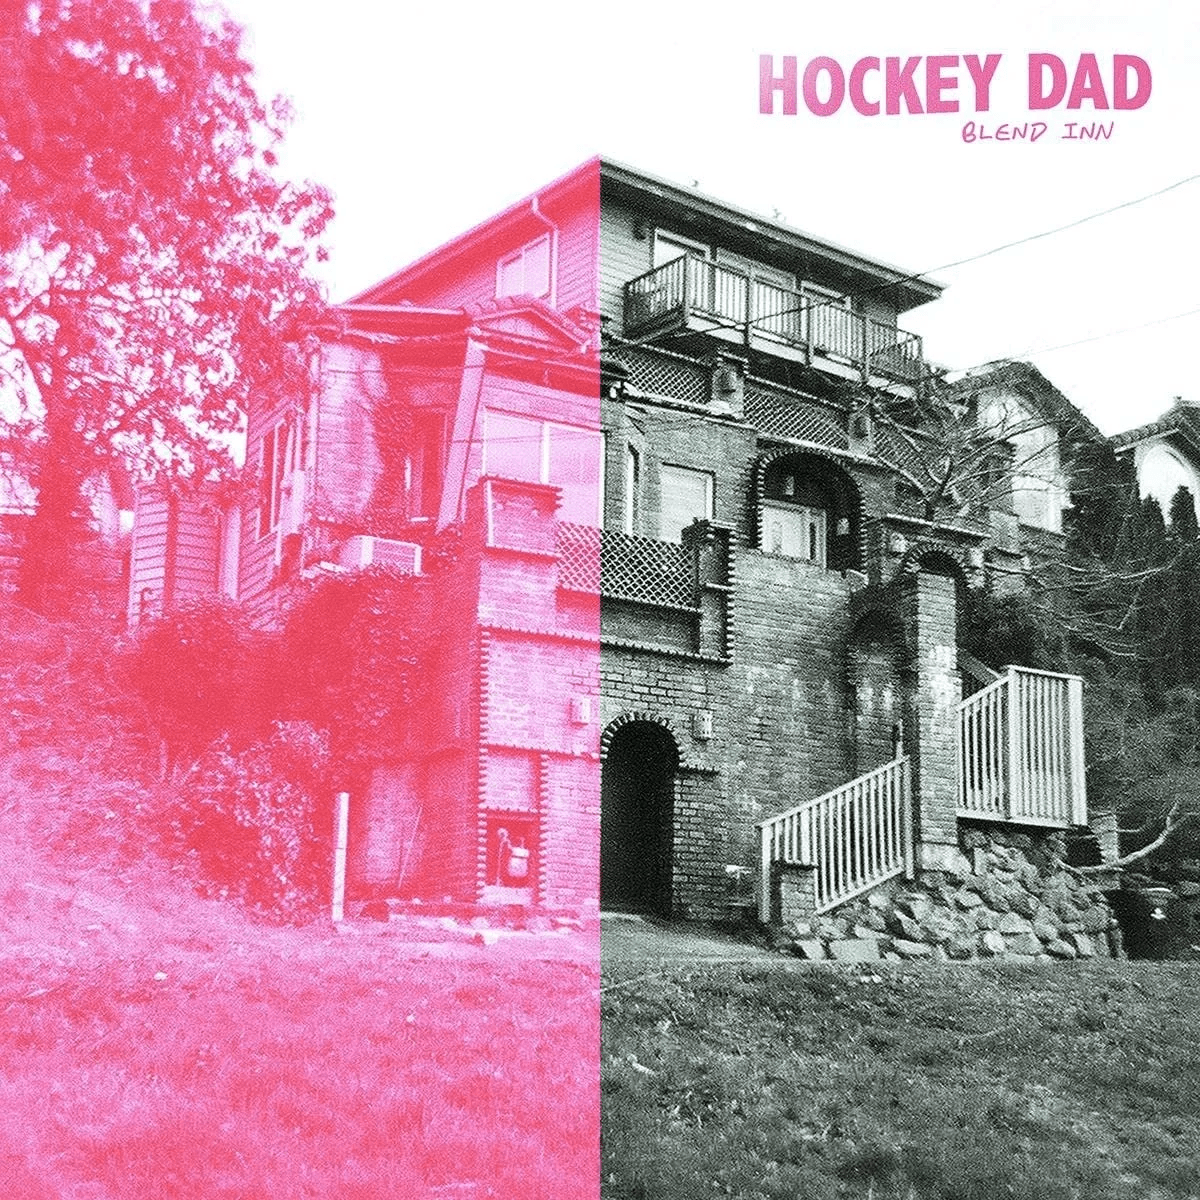 HOCKEY DAD - Blend Inn Vinyl HOCKEY DAD - Blend Inn Vinyl 